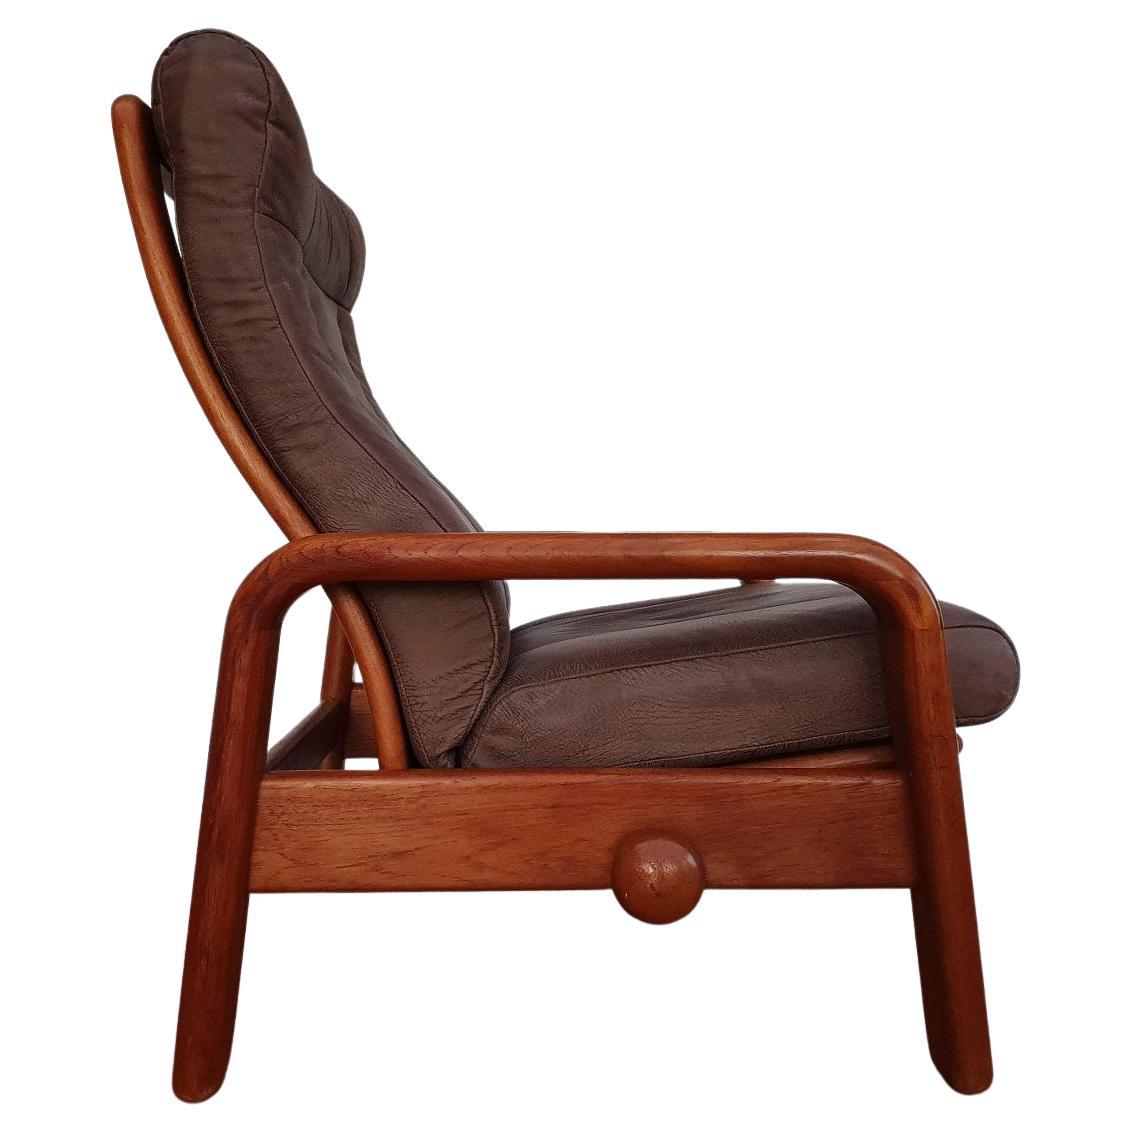 80s, Danish Adjustable Lounge Chair, Hs Design, Nubuck Leather, Solid Teak Wood For Sale